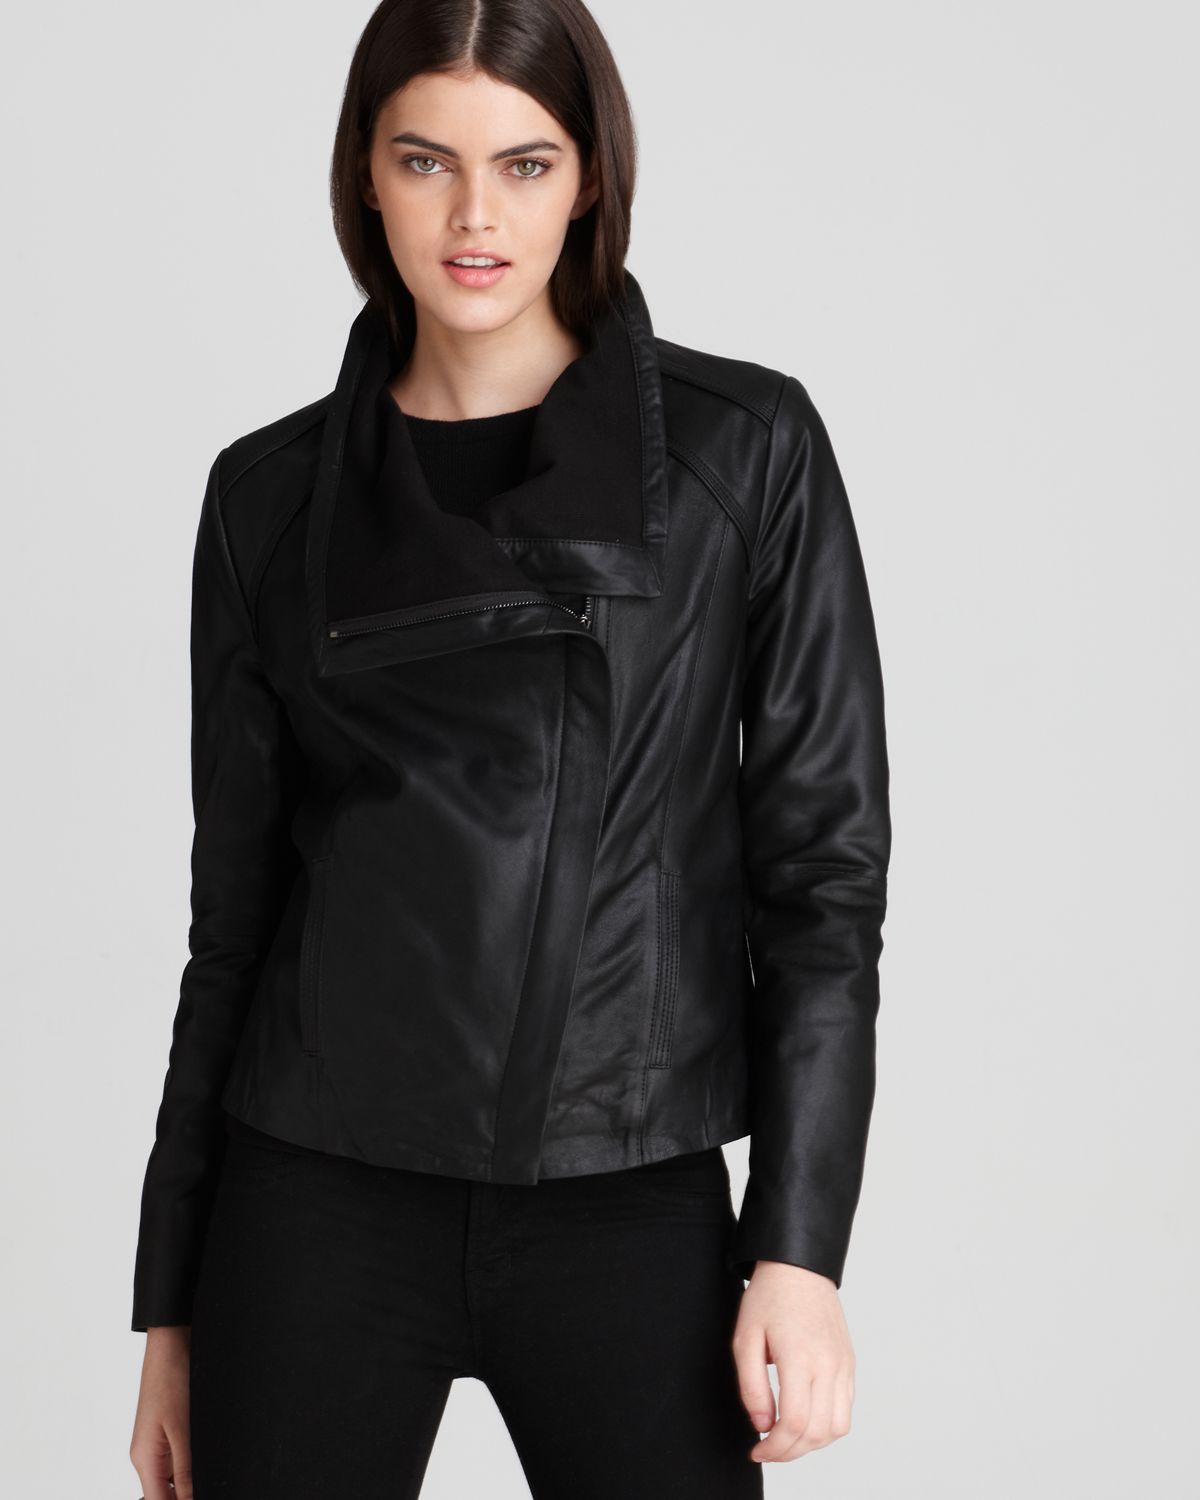 Elie Tahari Virginia Napoleon Drape Front Leather Jacket in Black - Lyst